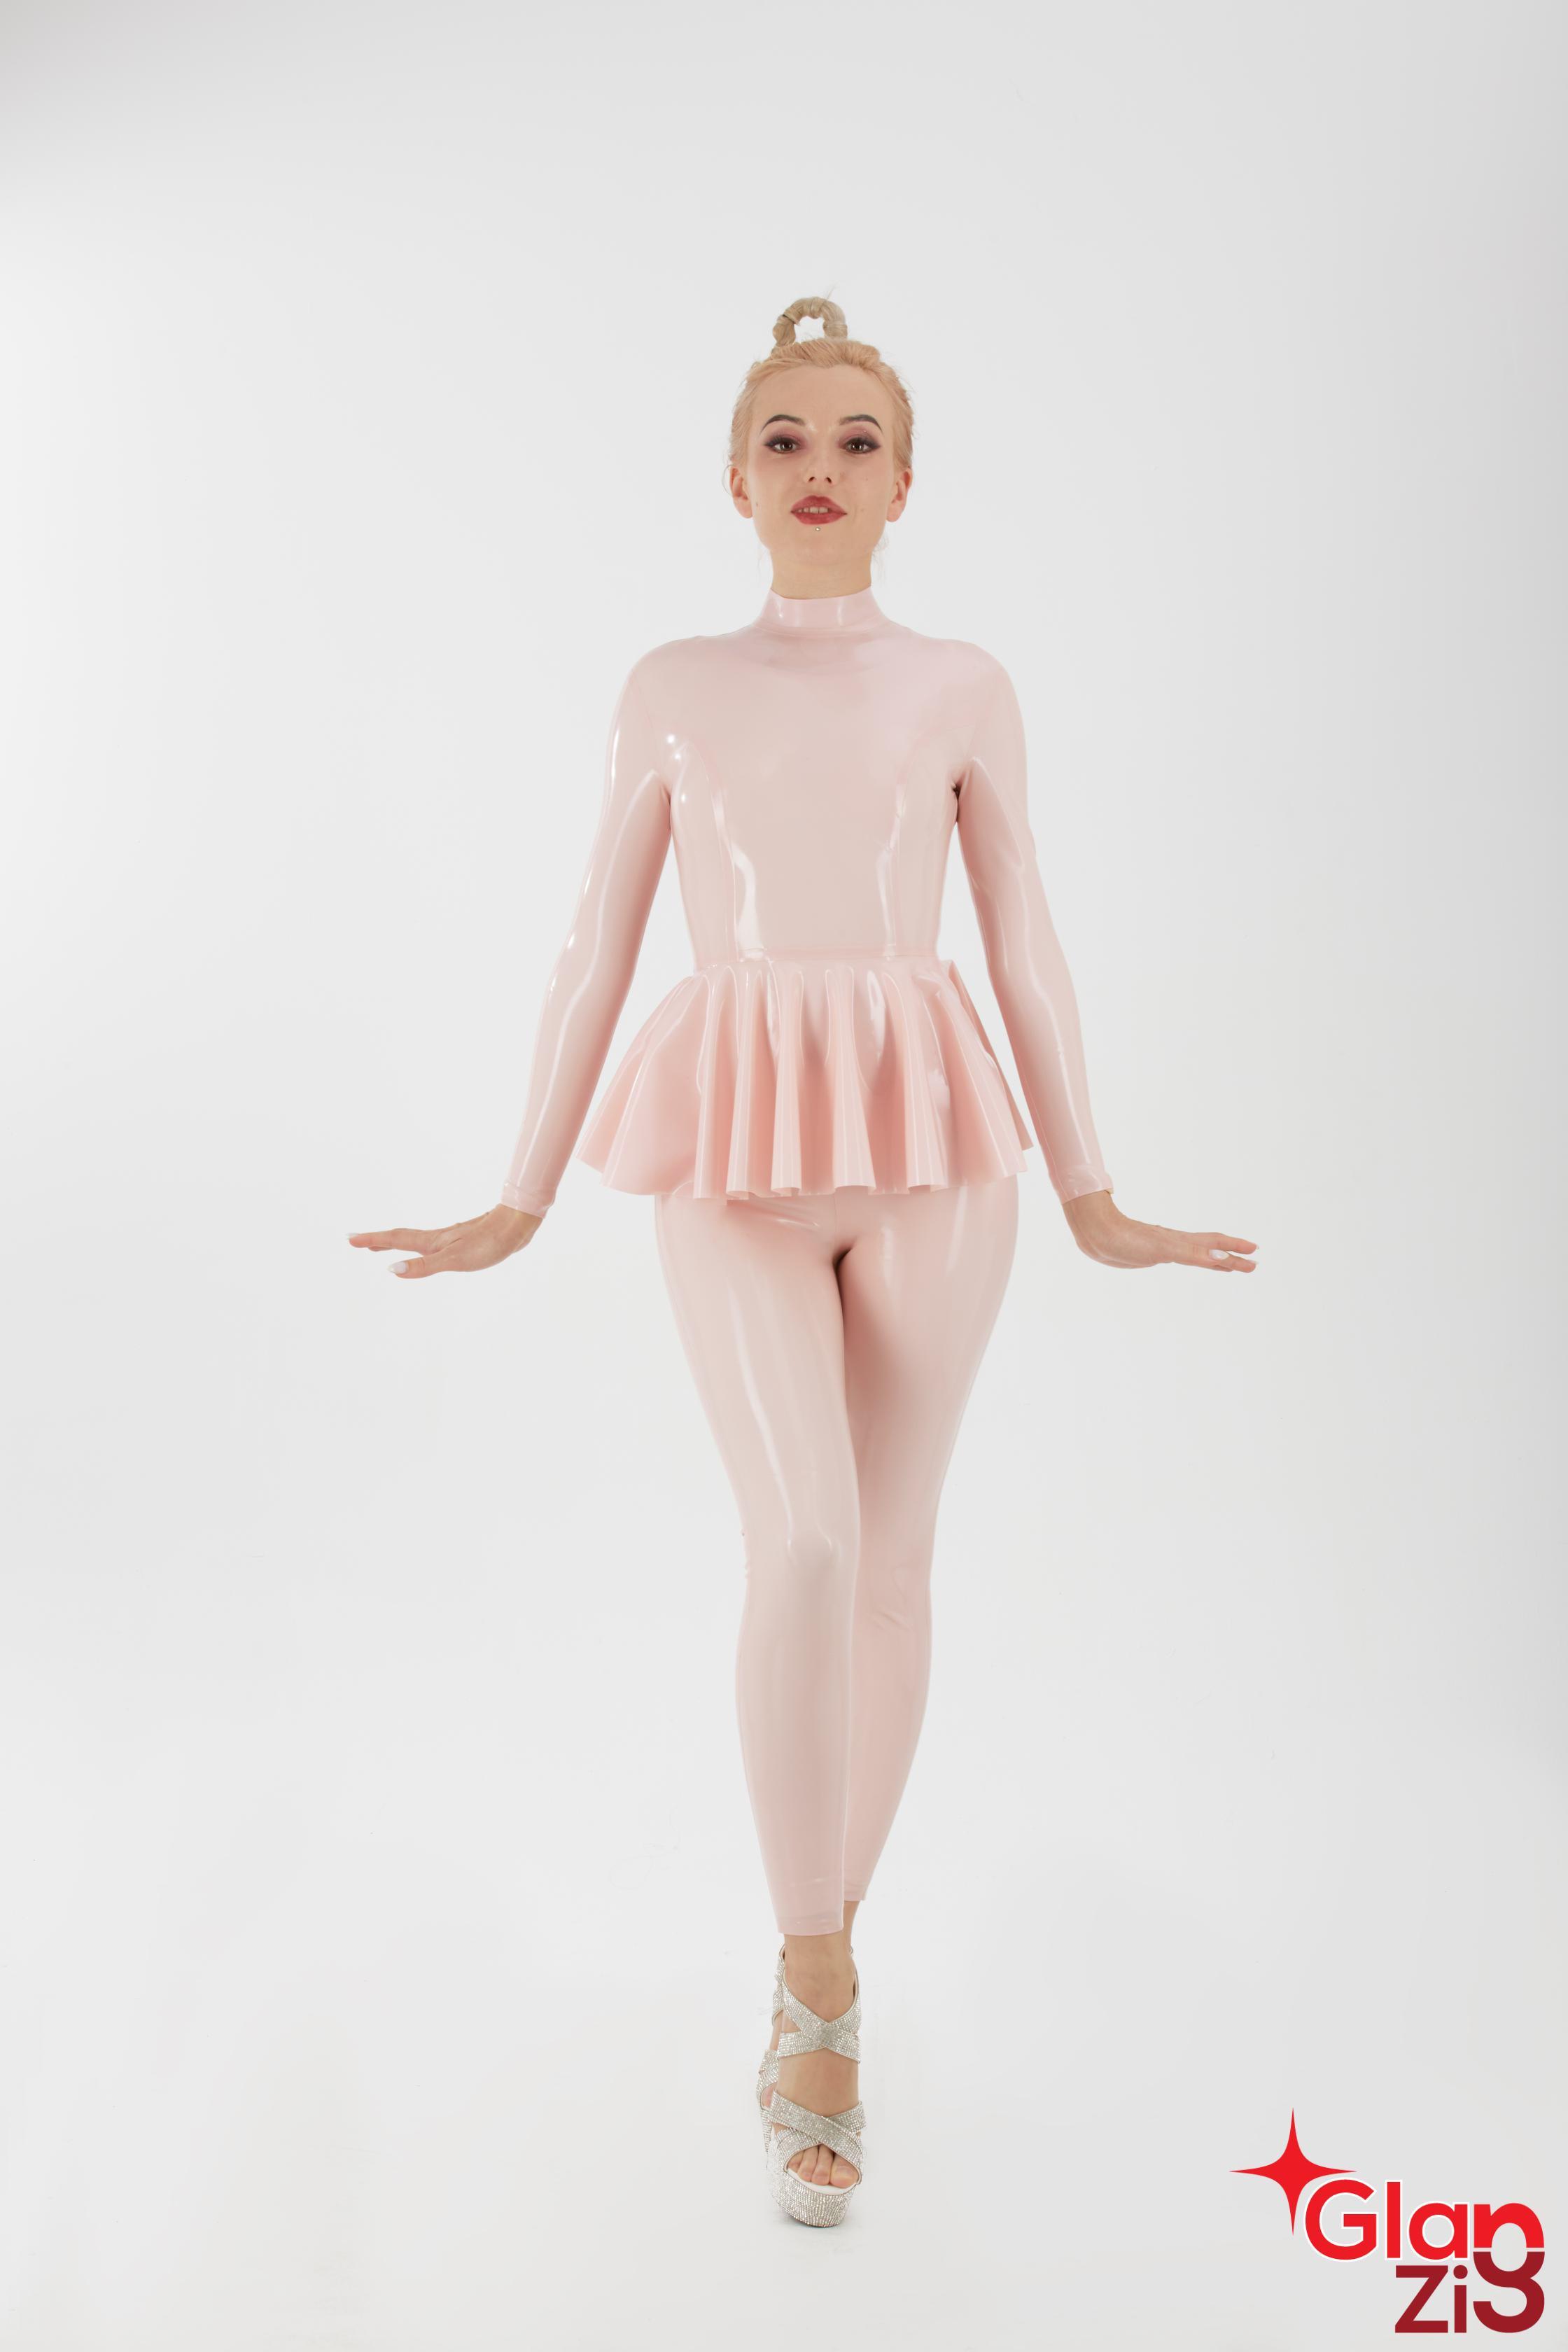 Tiny Dancer Latex Catsuit : Latex Dancewear Latex Dance : Latex Costume